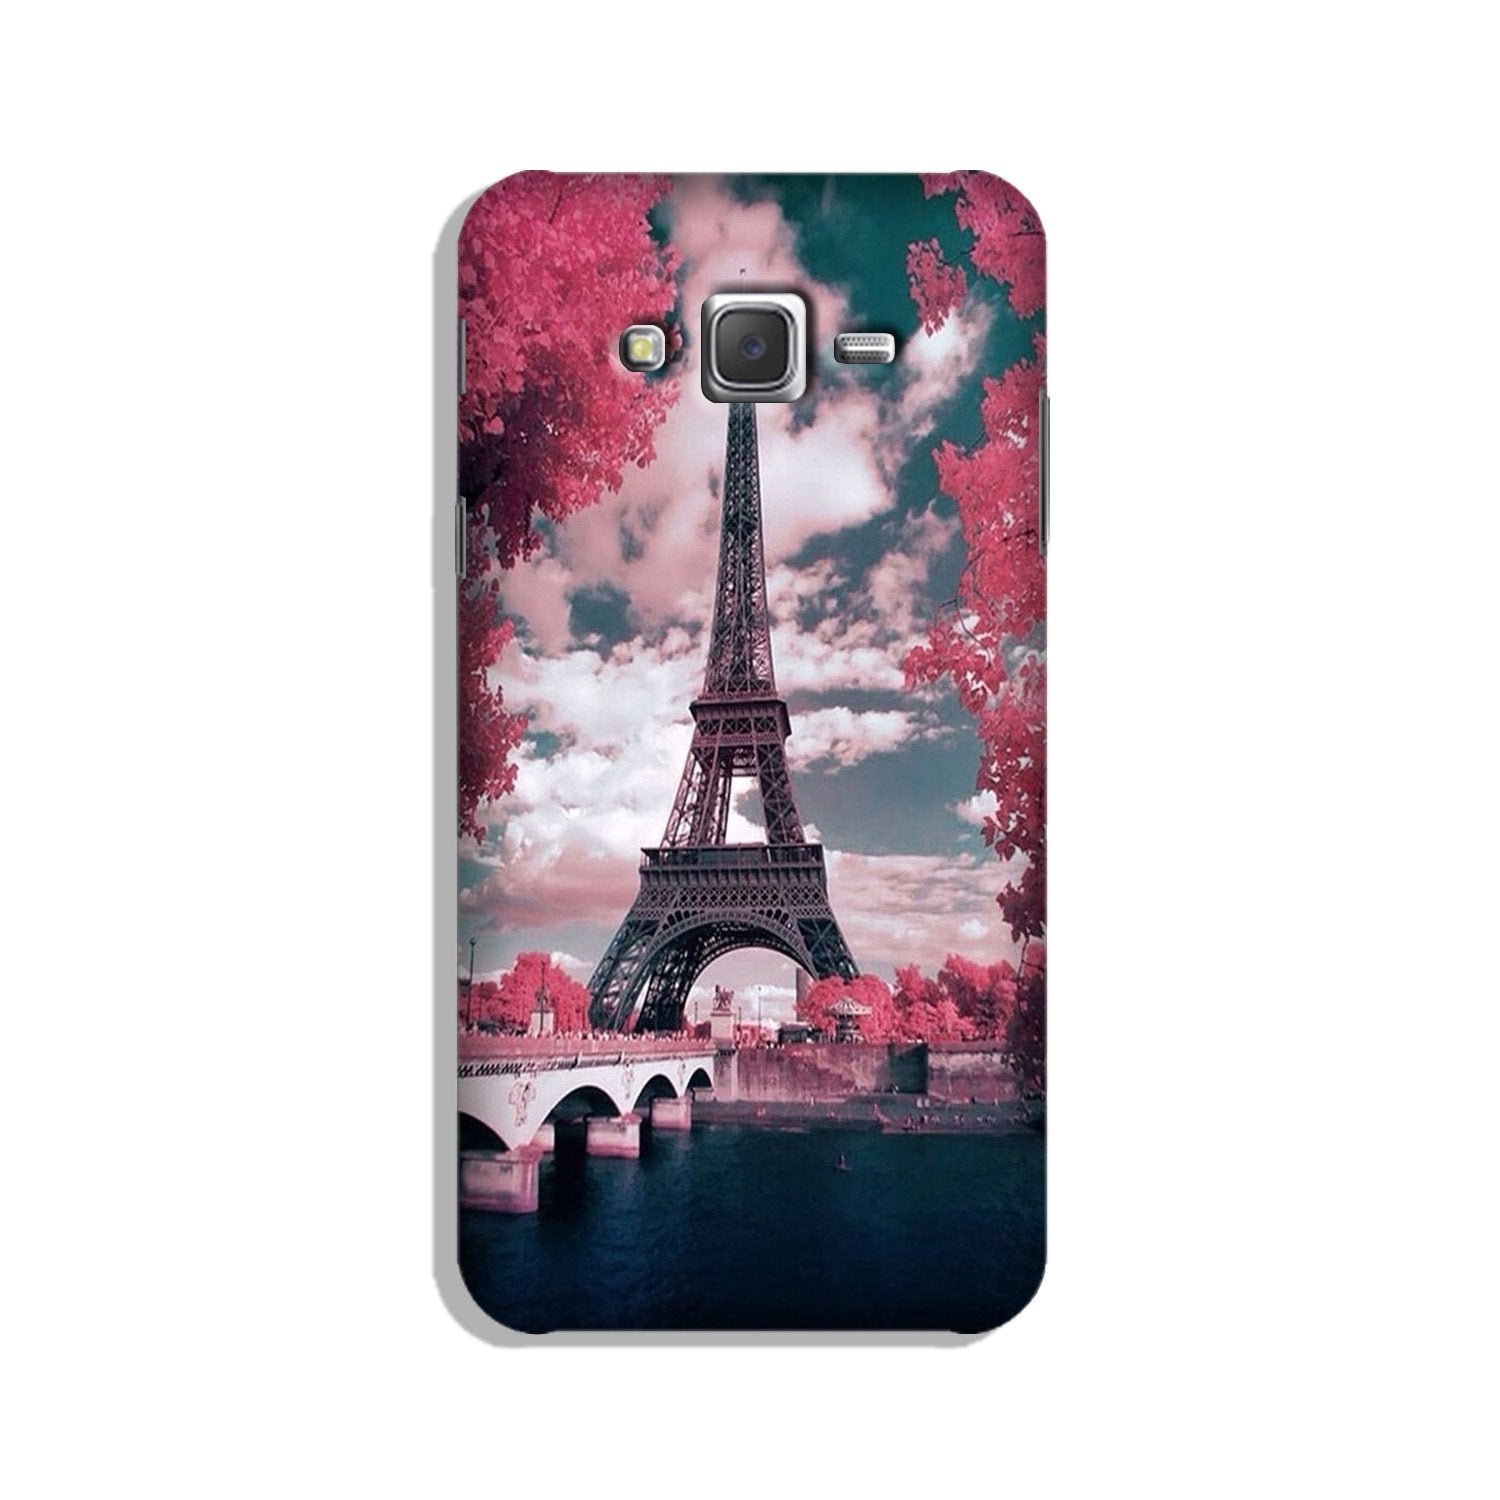 Eiffel Tower Case for Galaxy E7  (Design - 101)